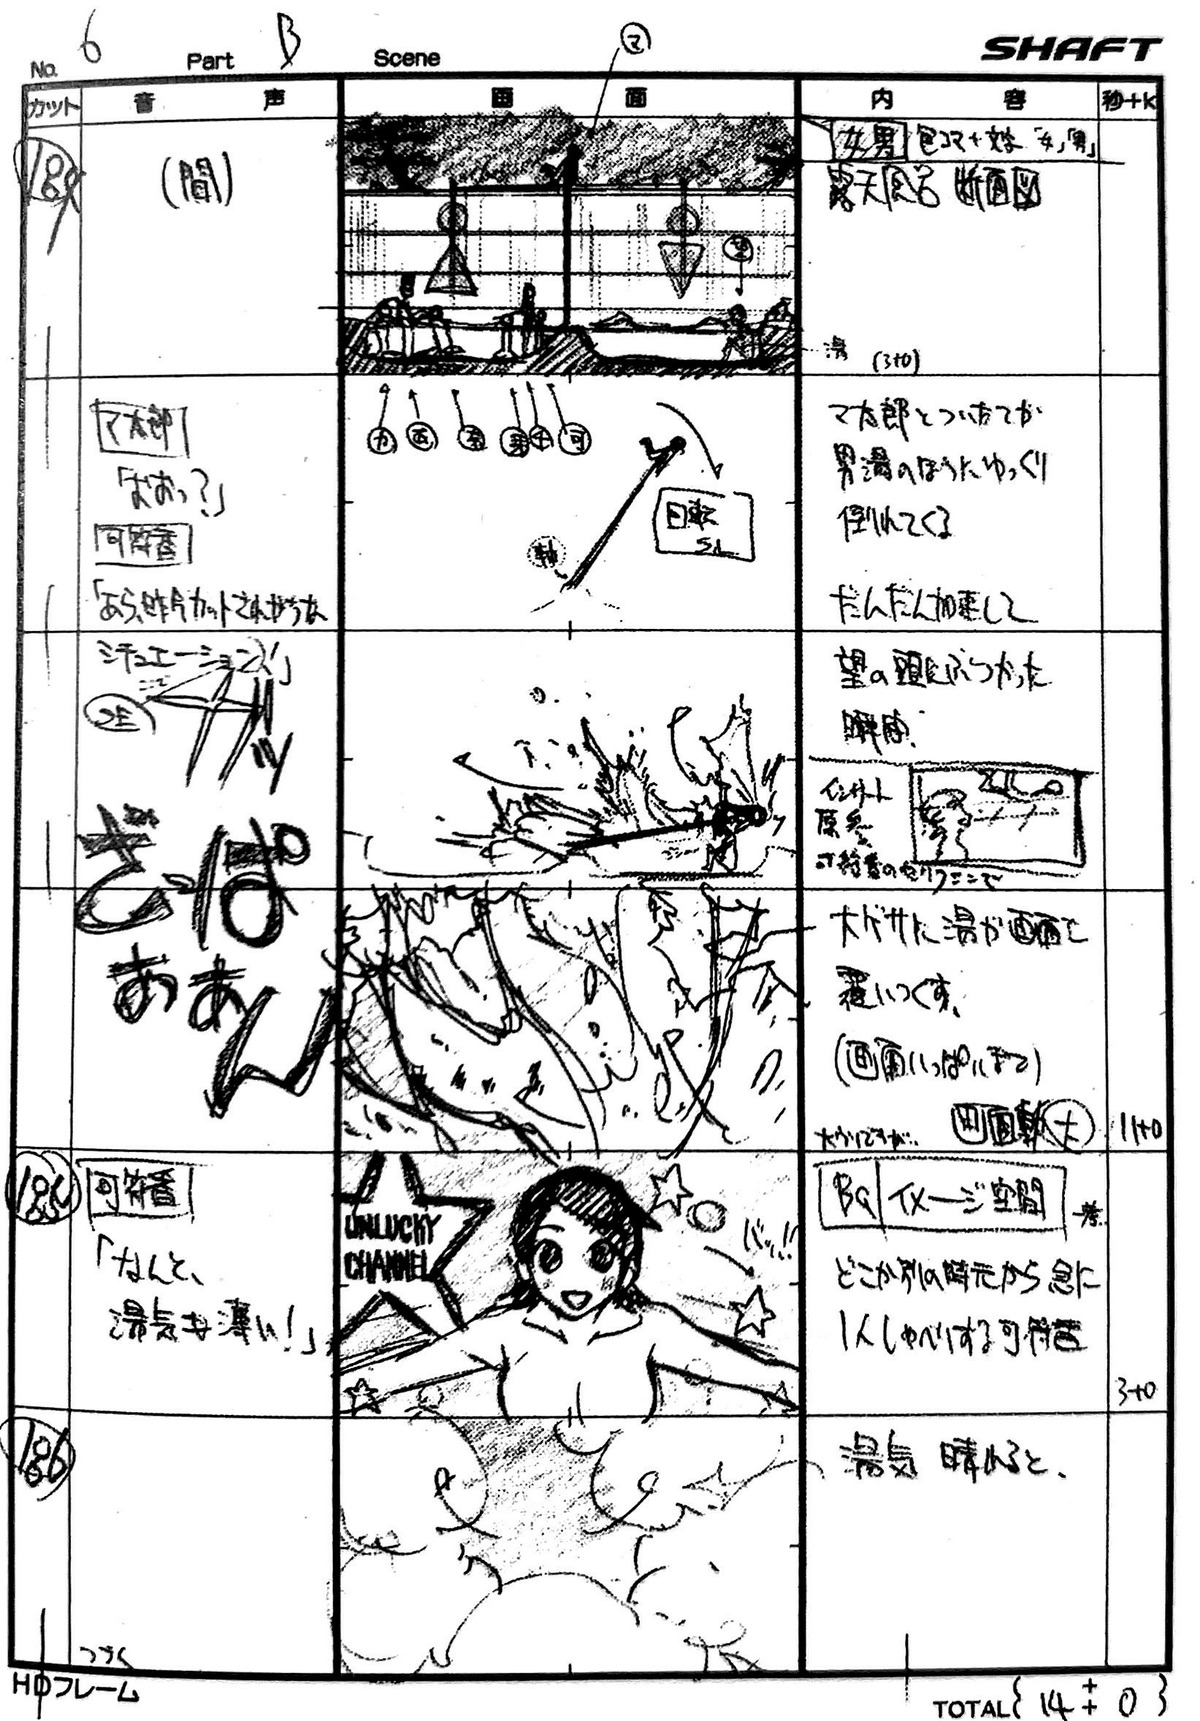 hiroki_yamamura production_materials sayonara_zetsubou_sensei storyboard